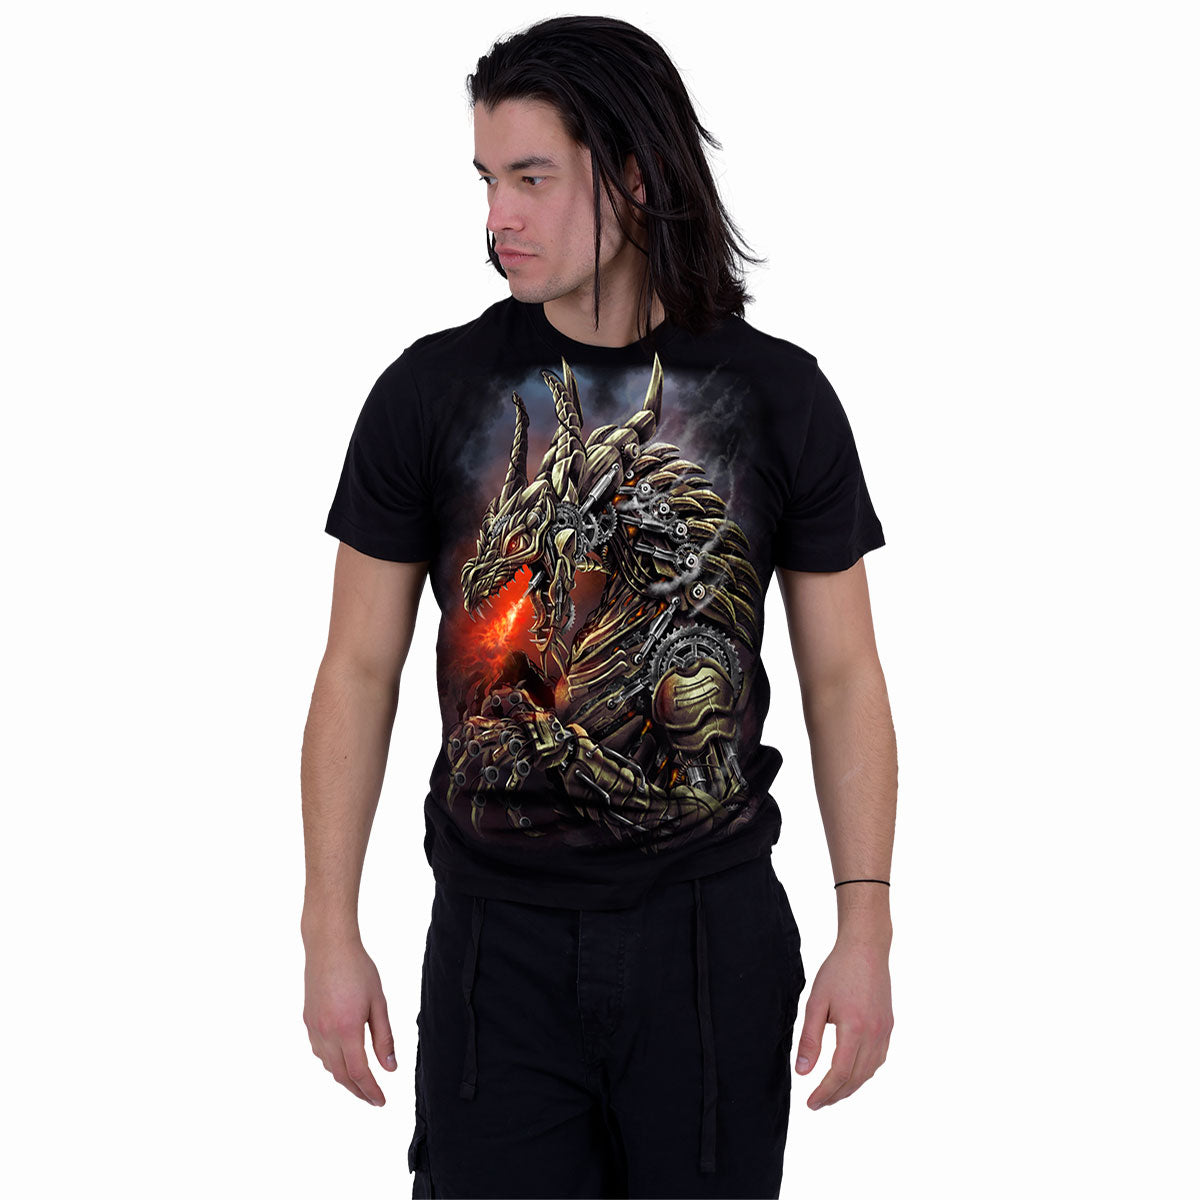 DRAGON COGS - T-Shirt Black